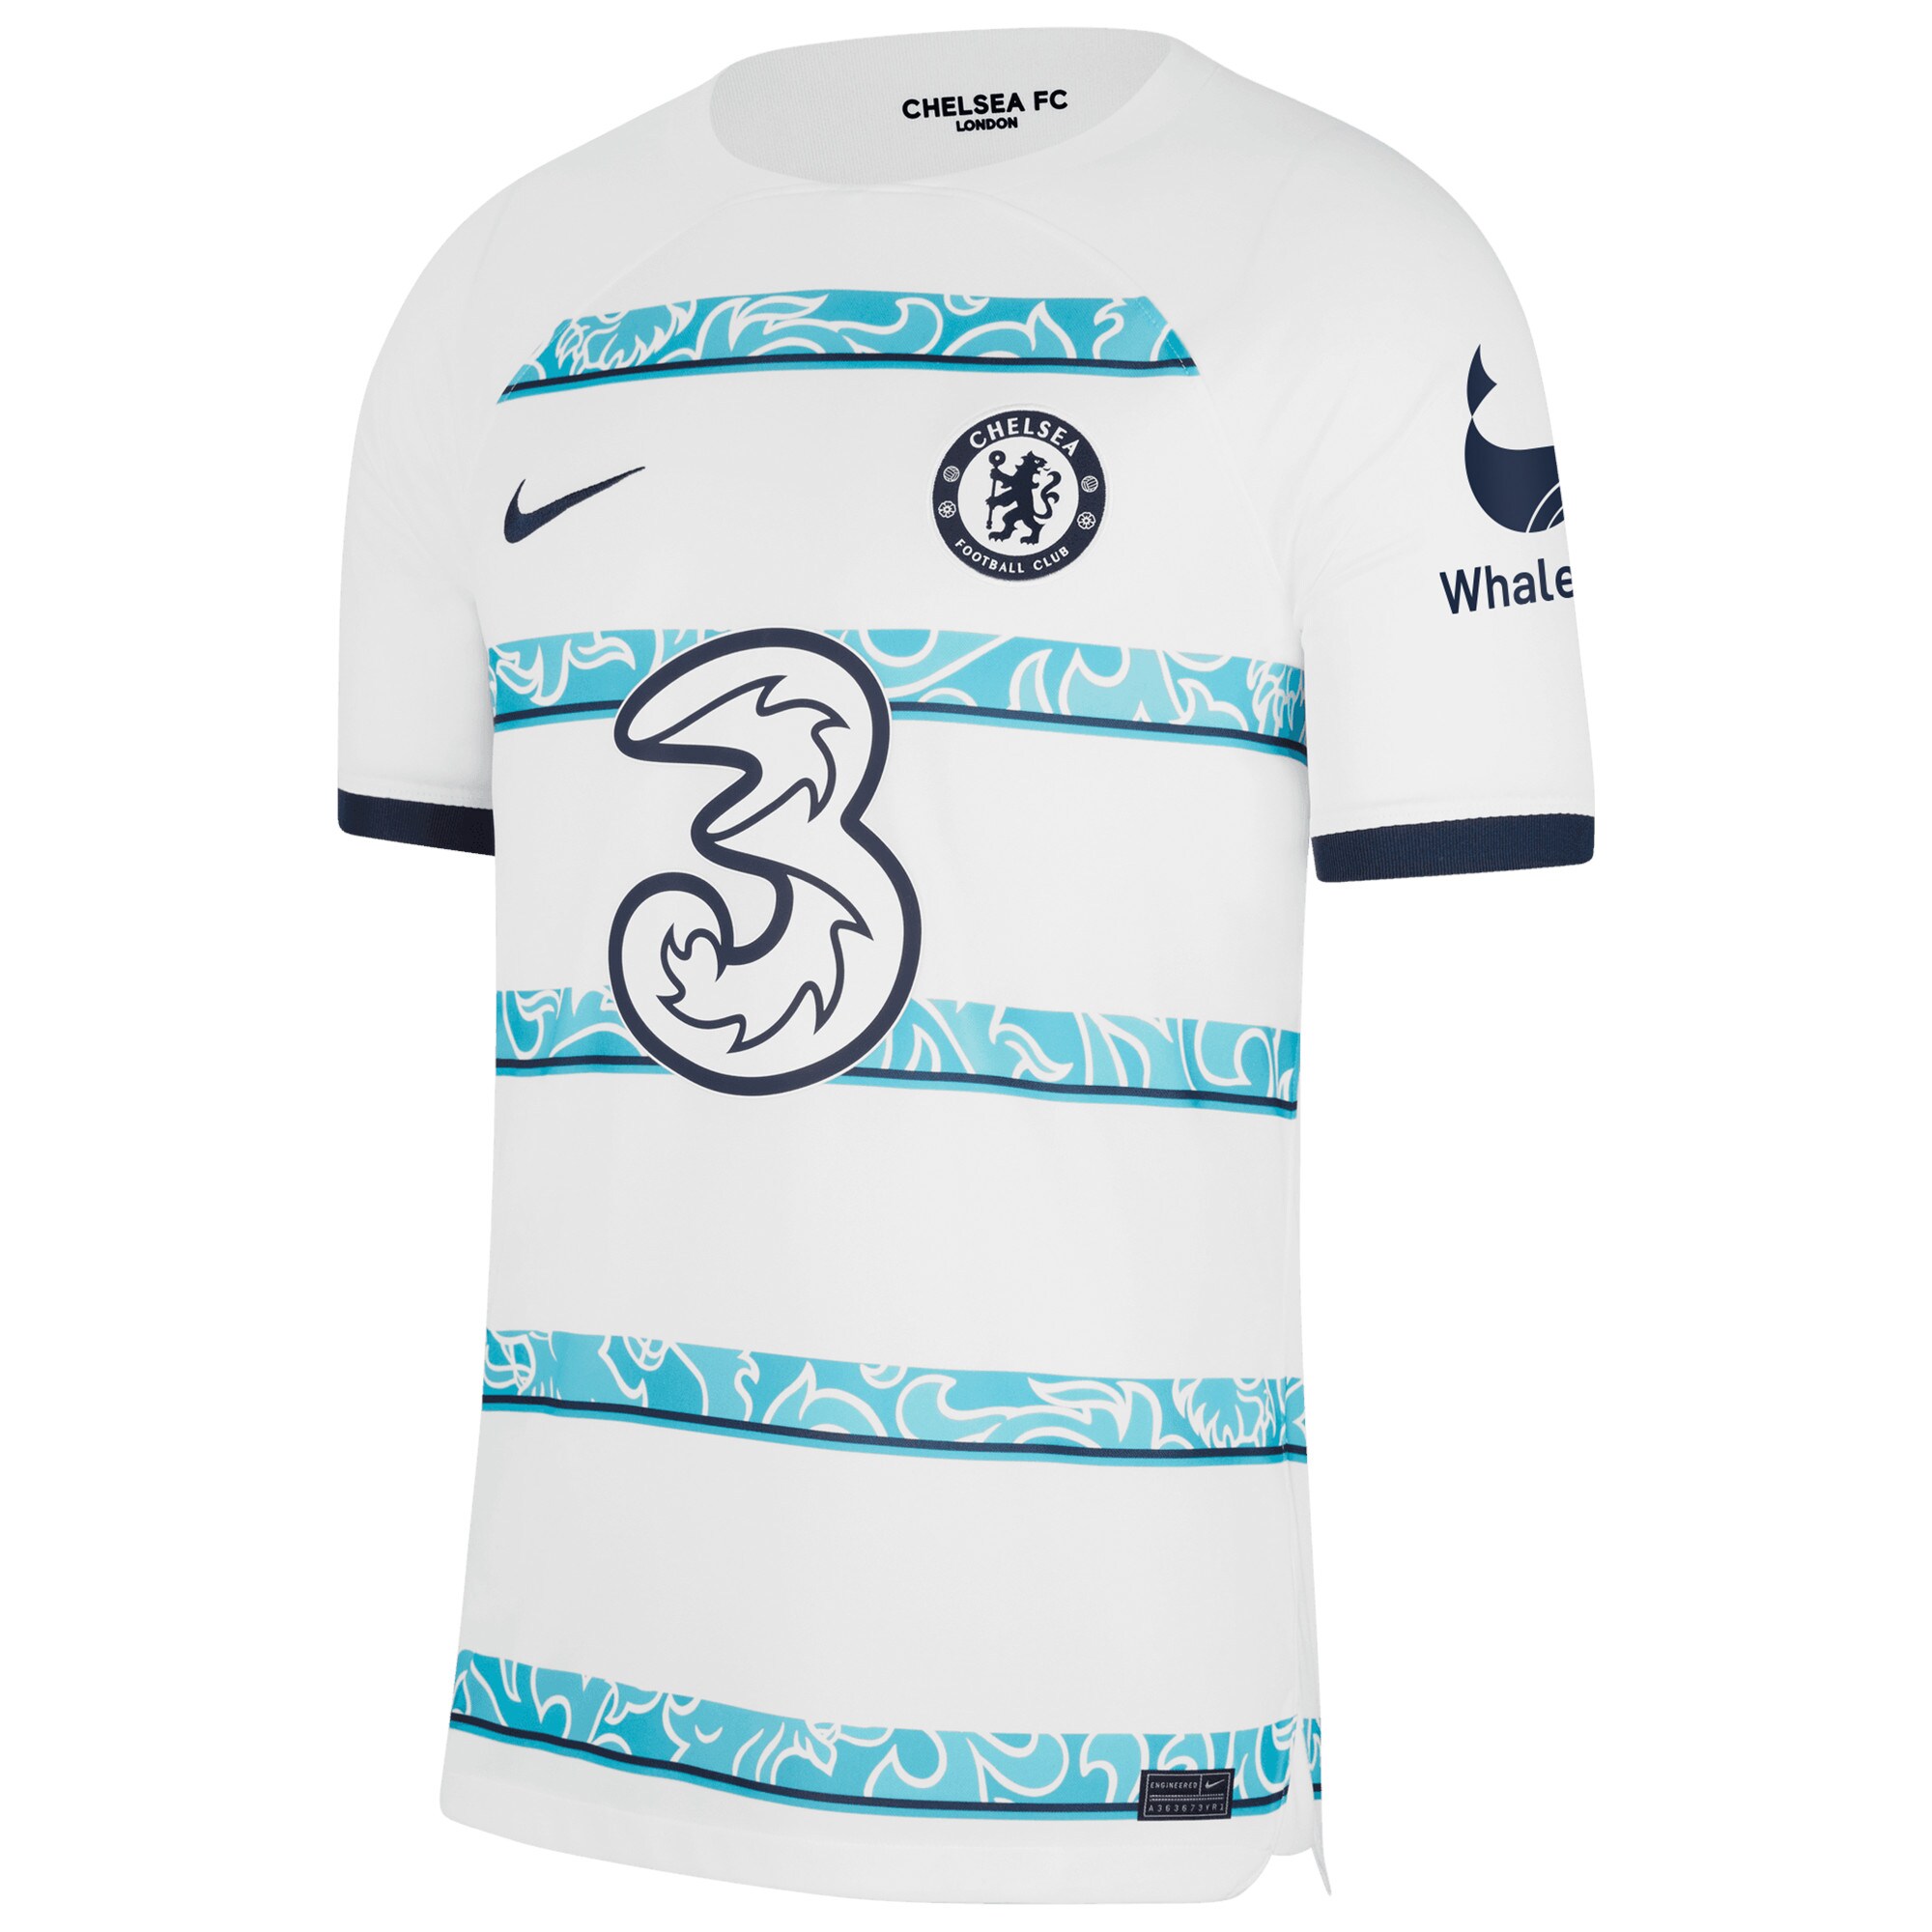 Chelsea WSL Away Stadium Shirt 2022-23 with Leupolz 8 printing